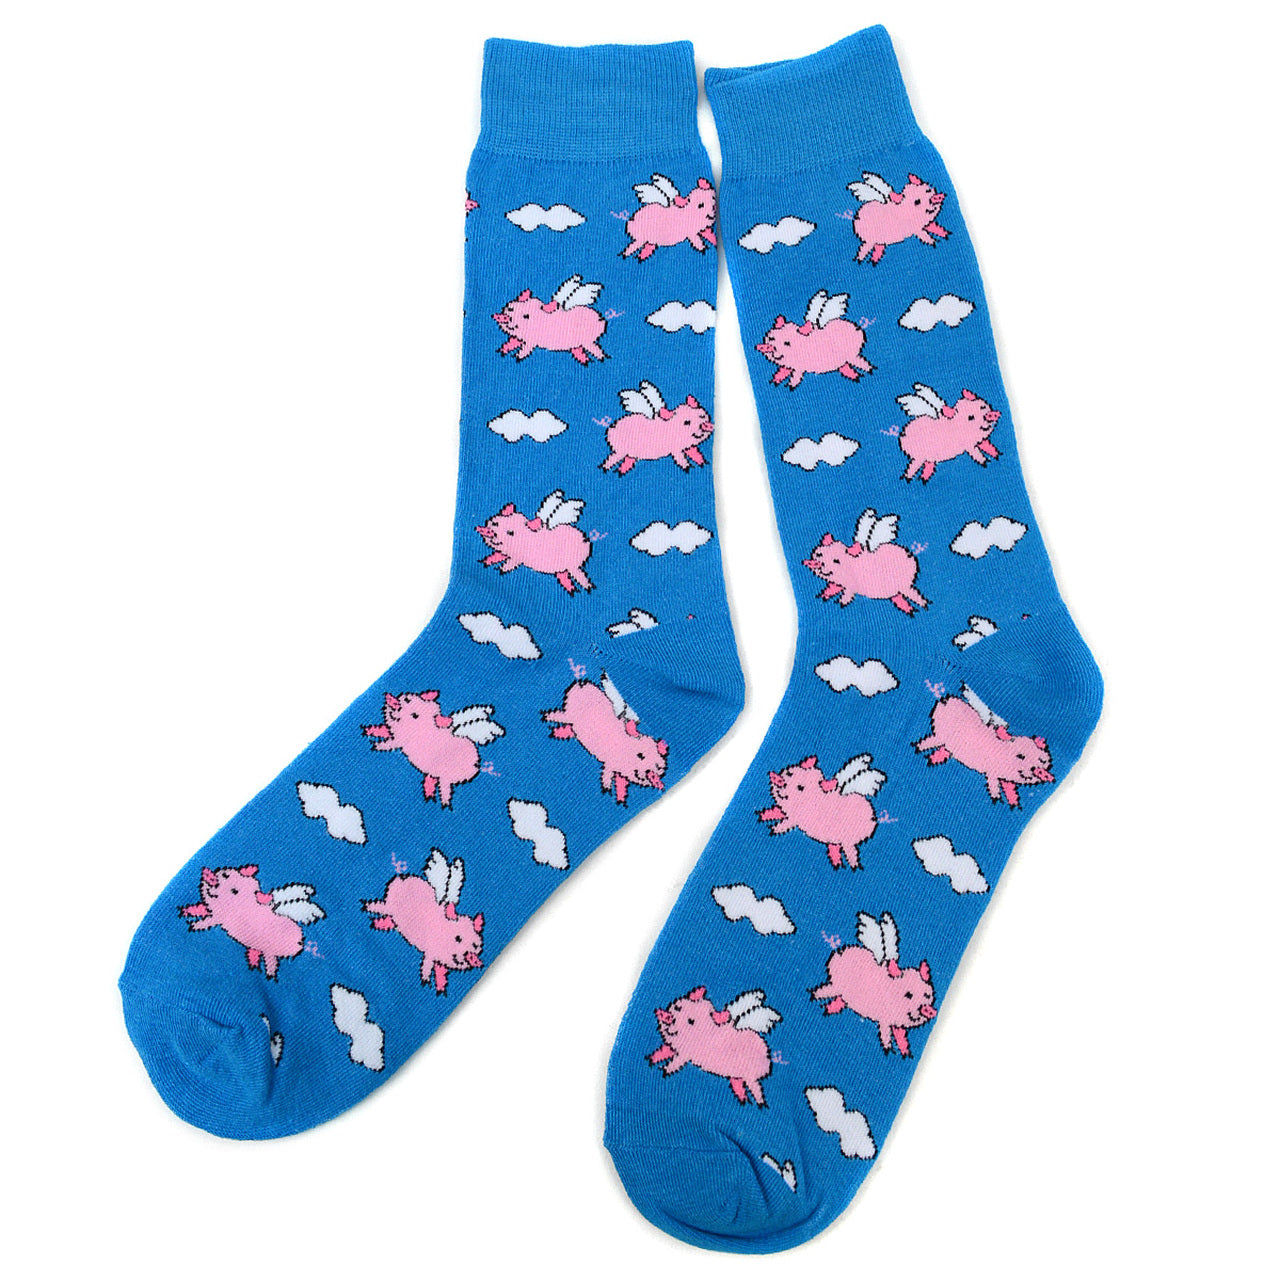 Fun Socks Men's Flying Pigs Novelty Socks Blue and Pink Pig Farm Little Piggies Gift for Dad Gift for Pig Lover